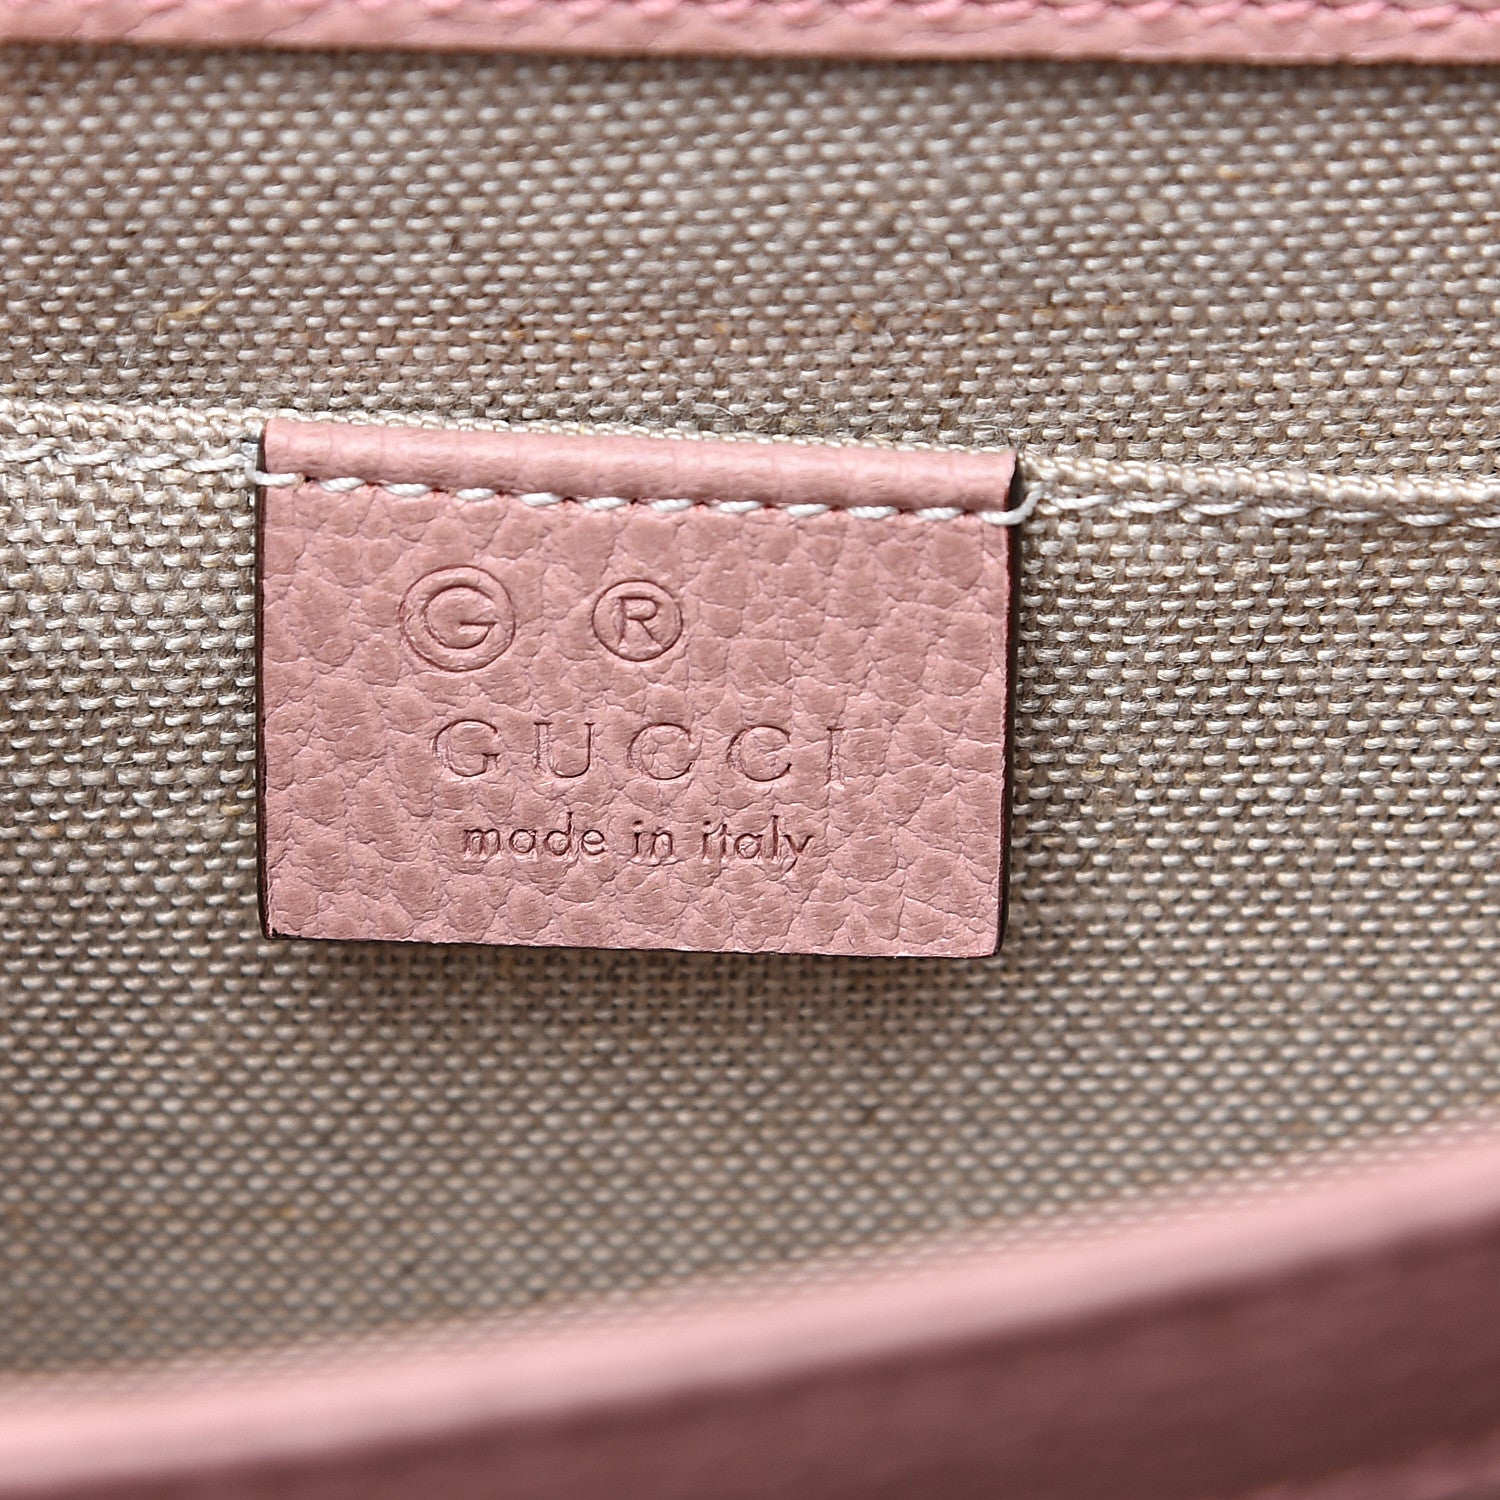 Gucci Crossbody Interlocking G Leather Small Soft Pink